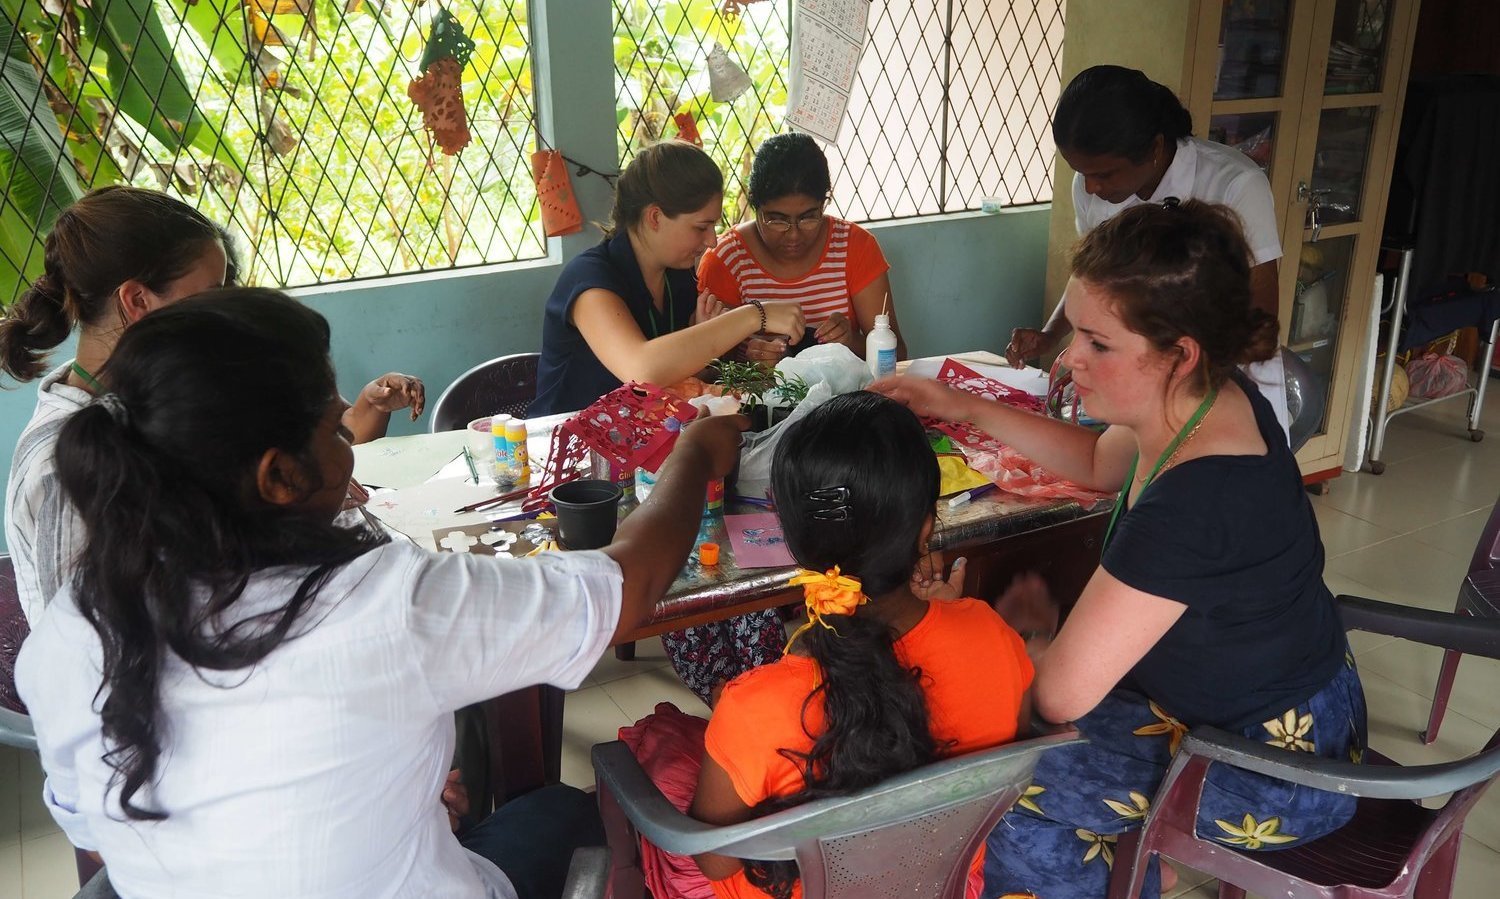 SLV Global trip to Sri Lanka to volunteer with mental health